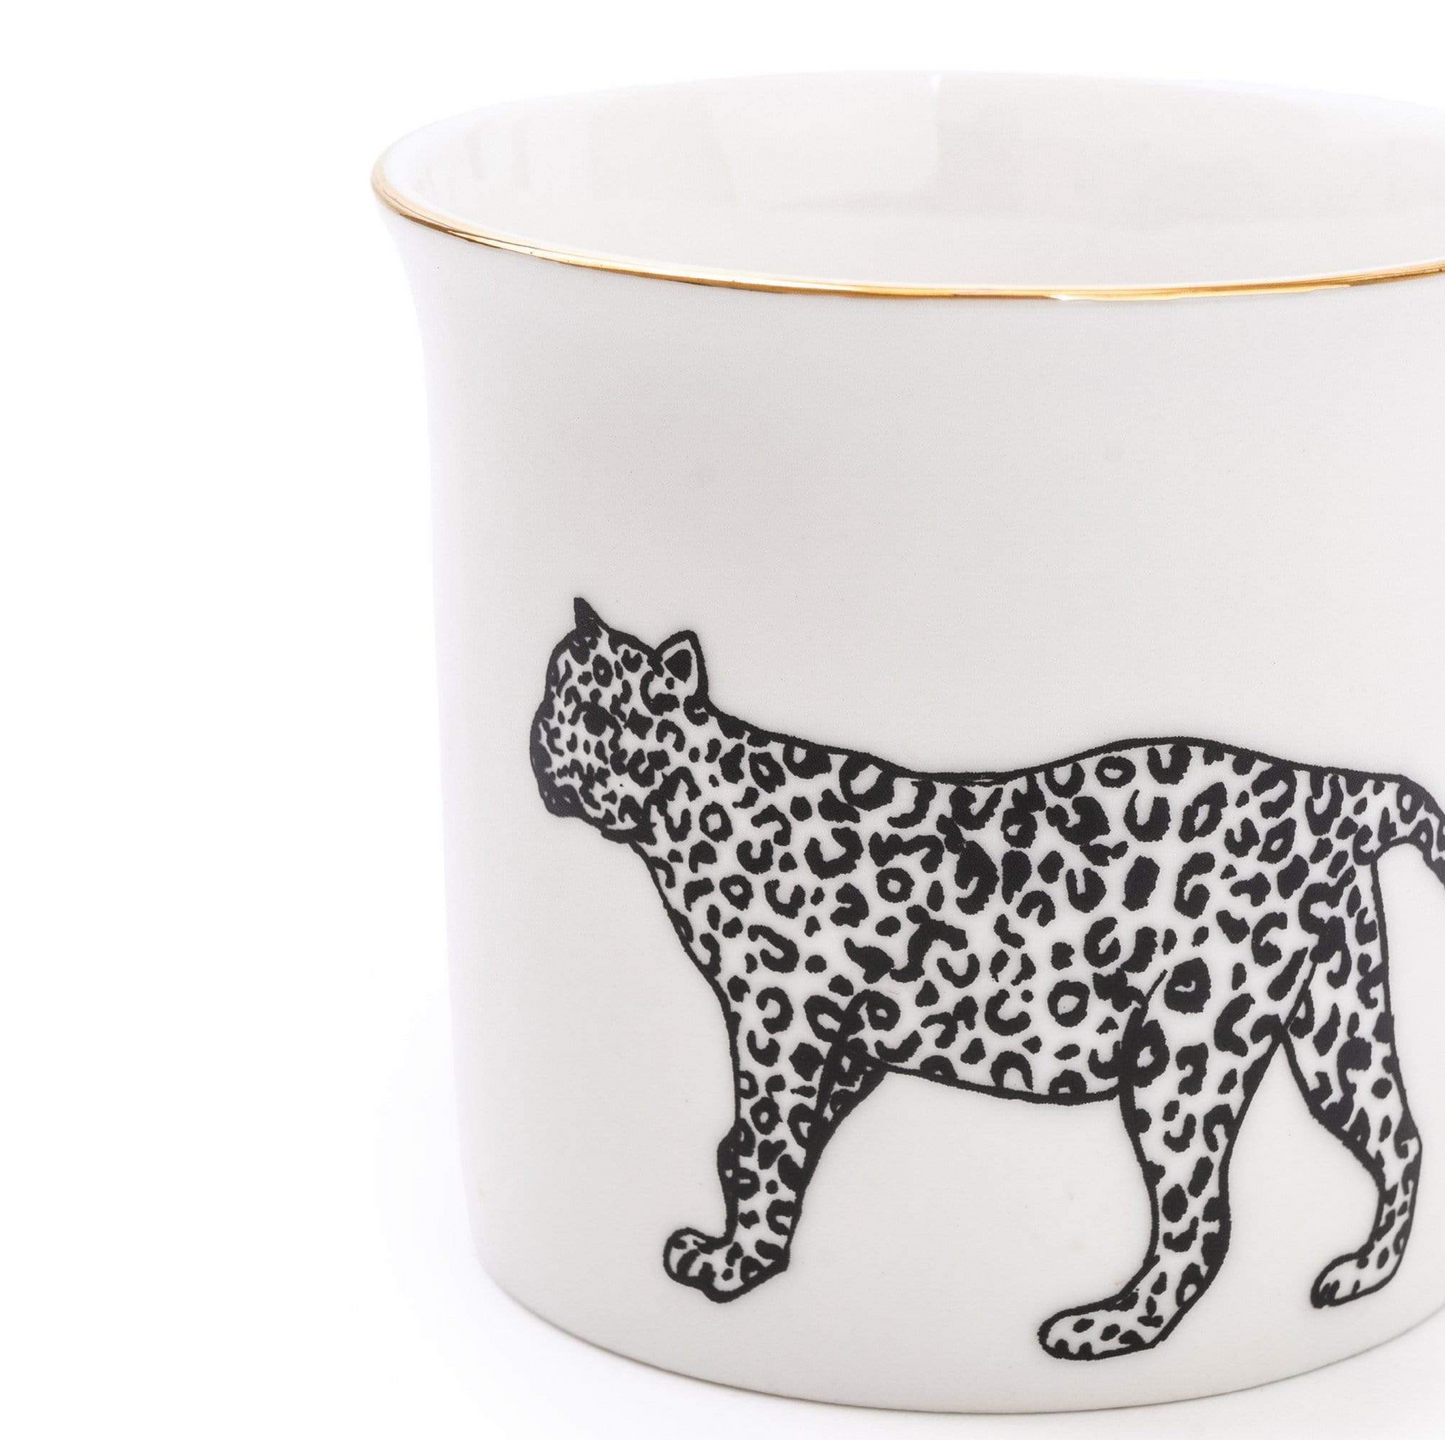 Fine Bone China Monochrome Mug, Cheetah